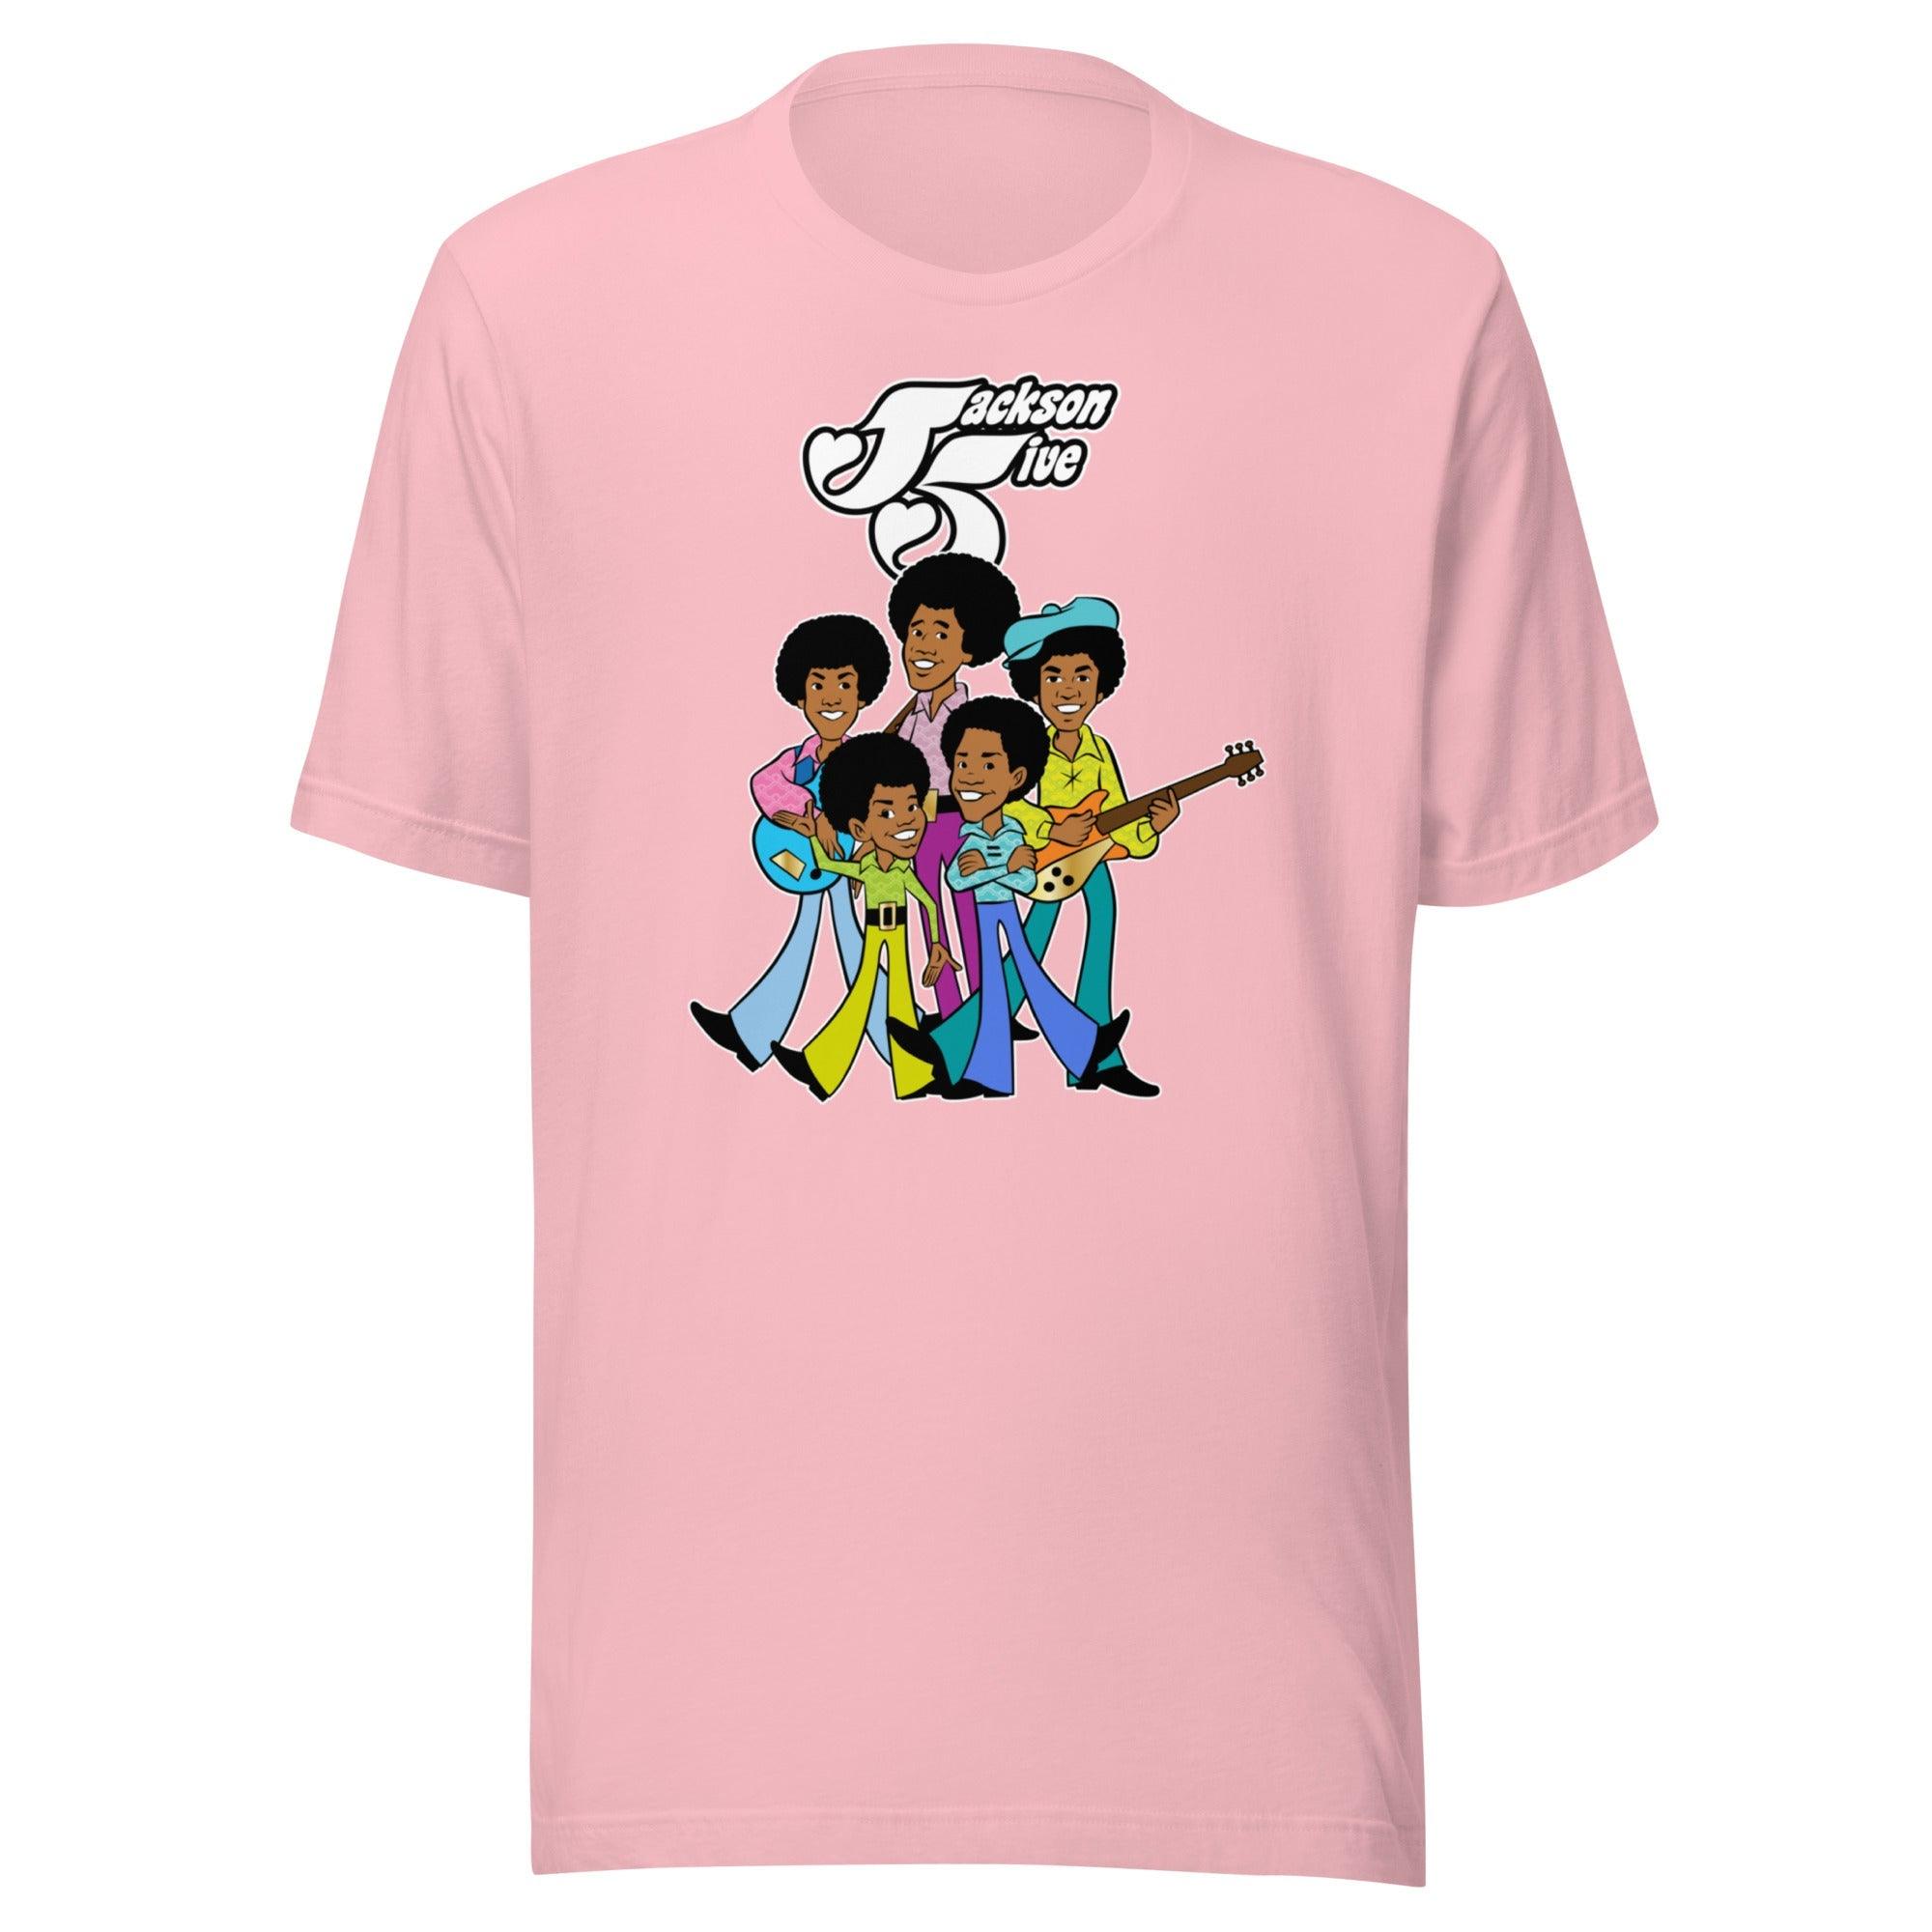 70's Black Pop Band T-shirt Animated Portrait Short Sleeve Unisex Top - TopKoalaTee